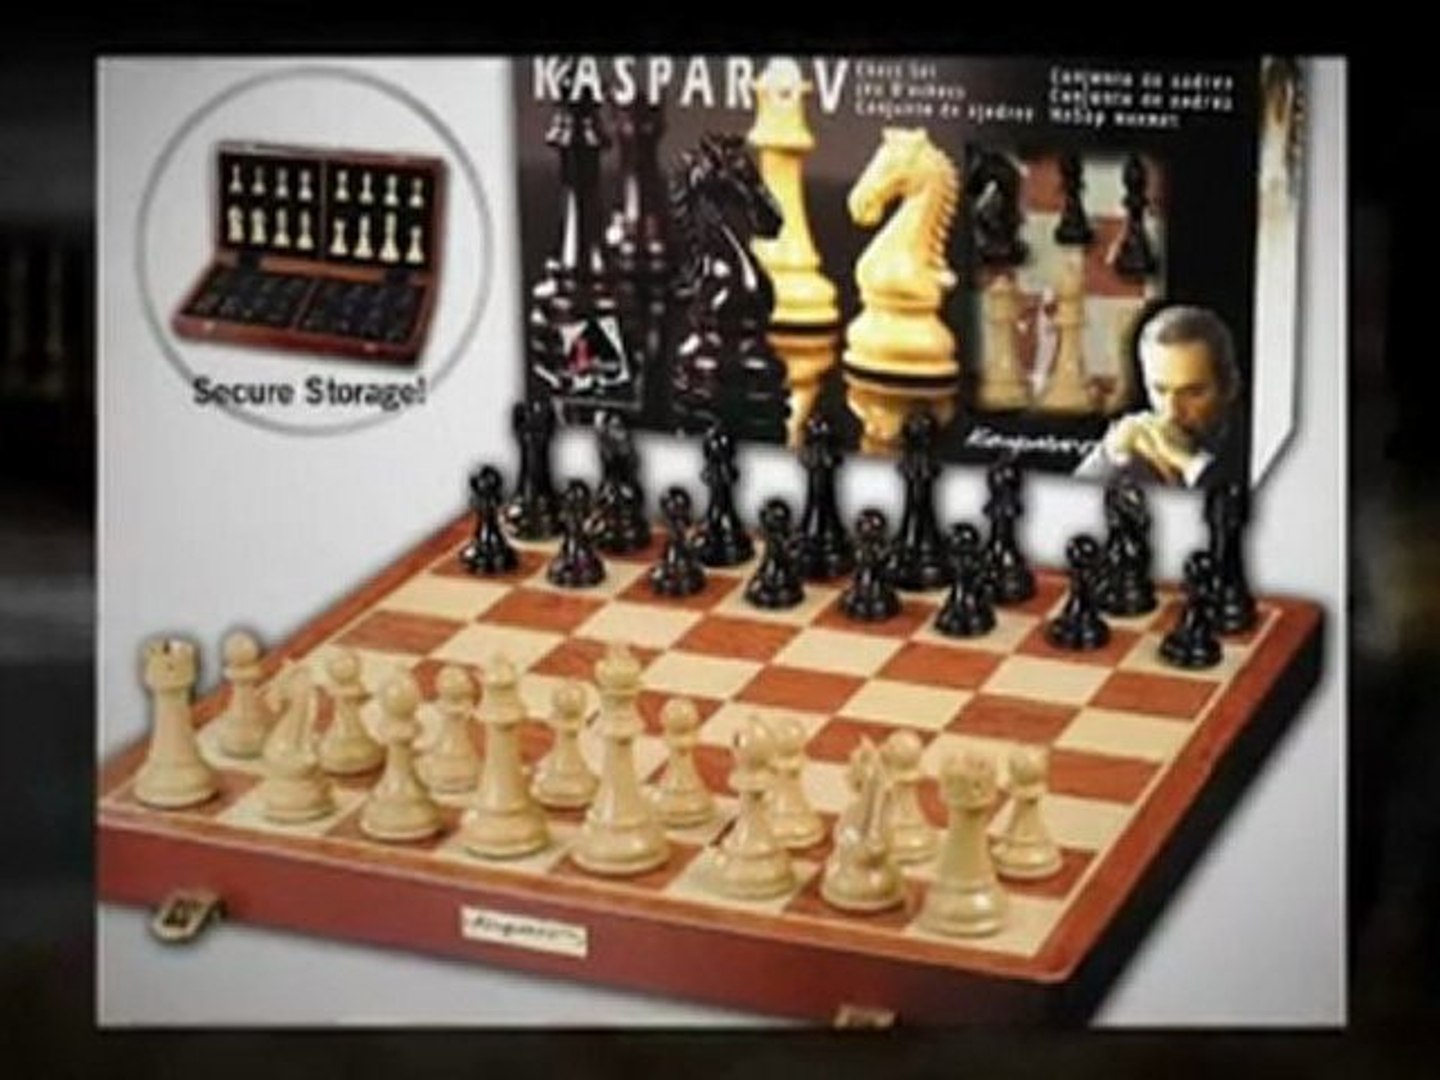 GM Garry Kasparov (Raffael) vs GM Anton Demchenko (Falstaf) Chess